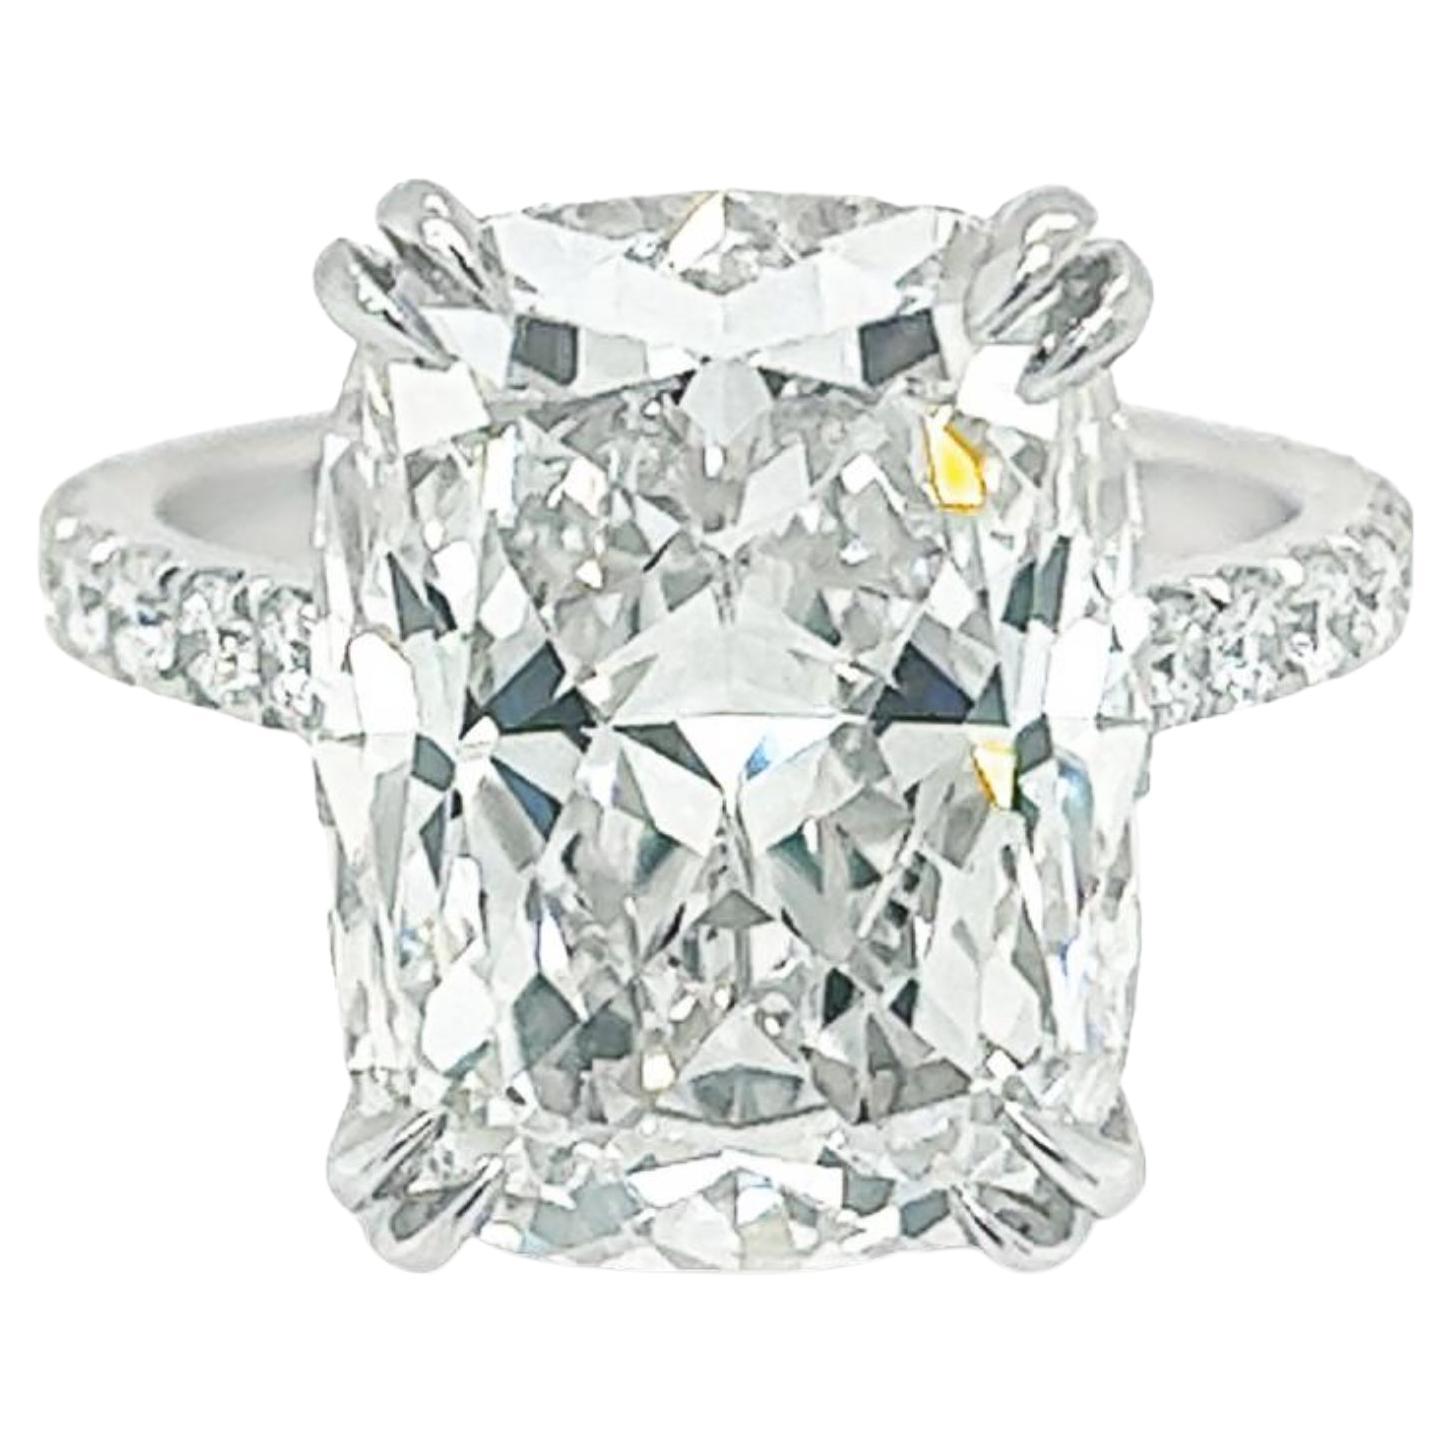 David Rosenberg Verlobungsring mit 10,07 Karat Diamanten in Kissenform F/VVS1 GIA